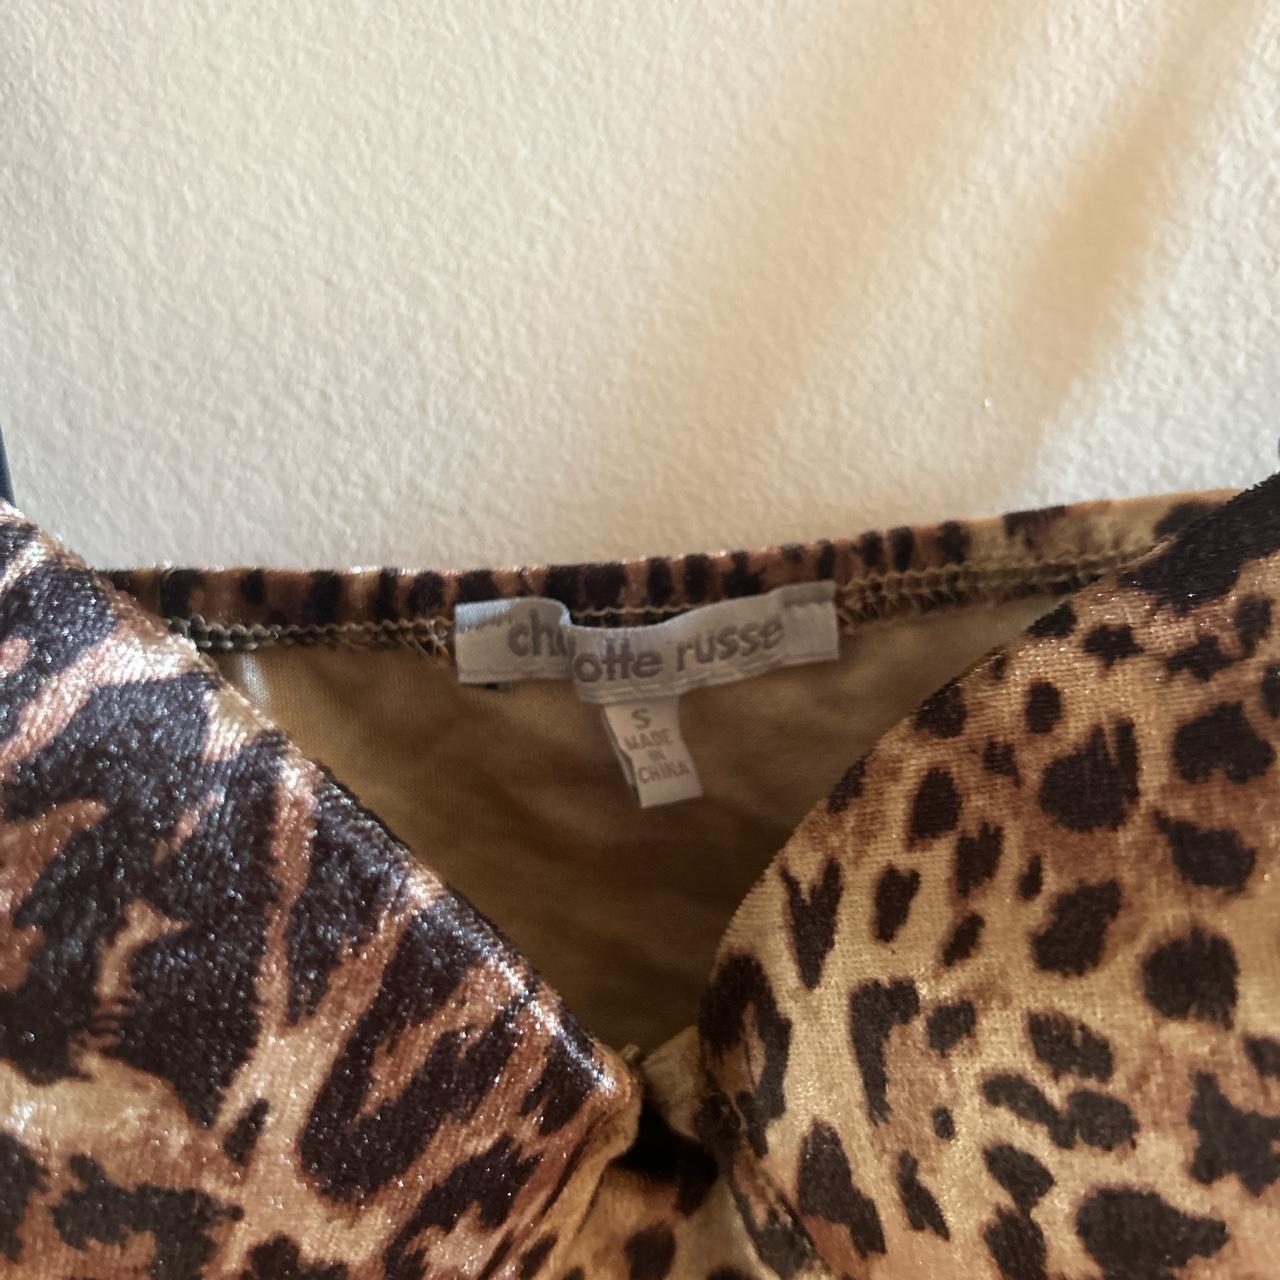 leopard corset top size small bust 32 - 34 length - Depop